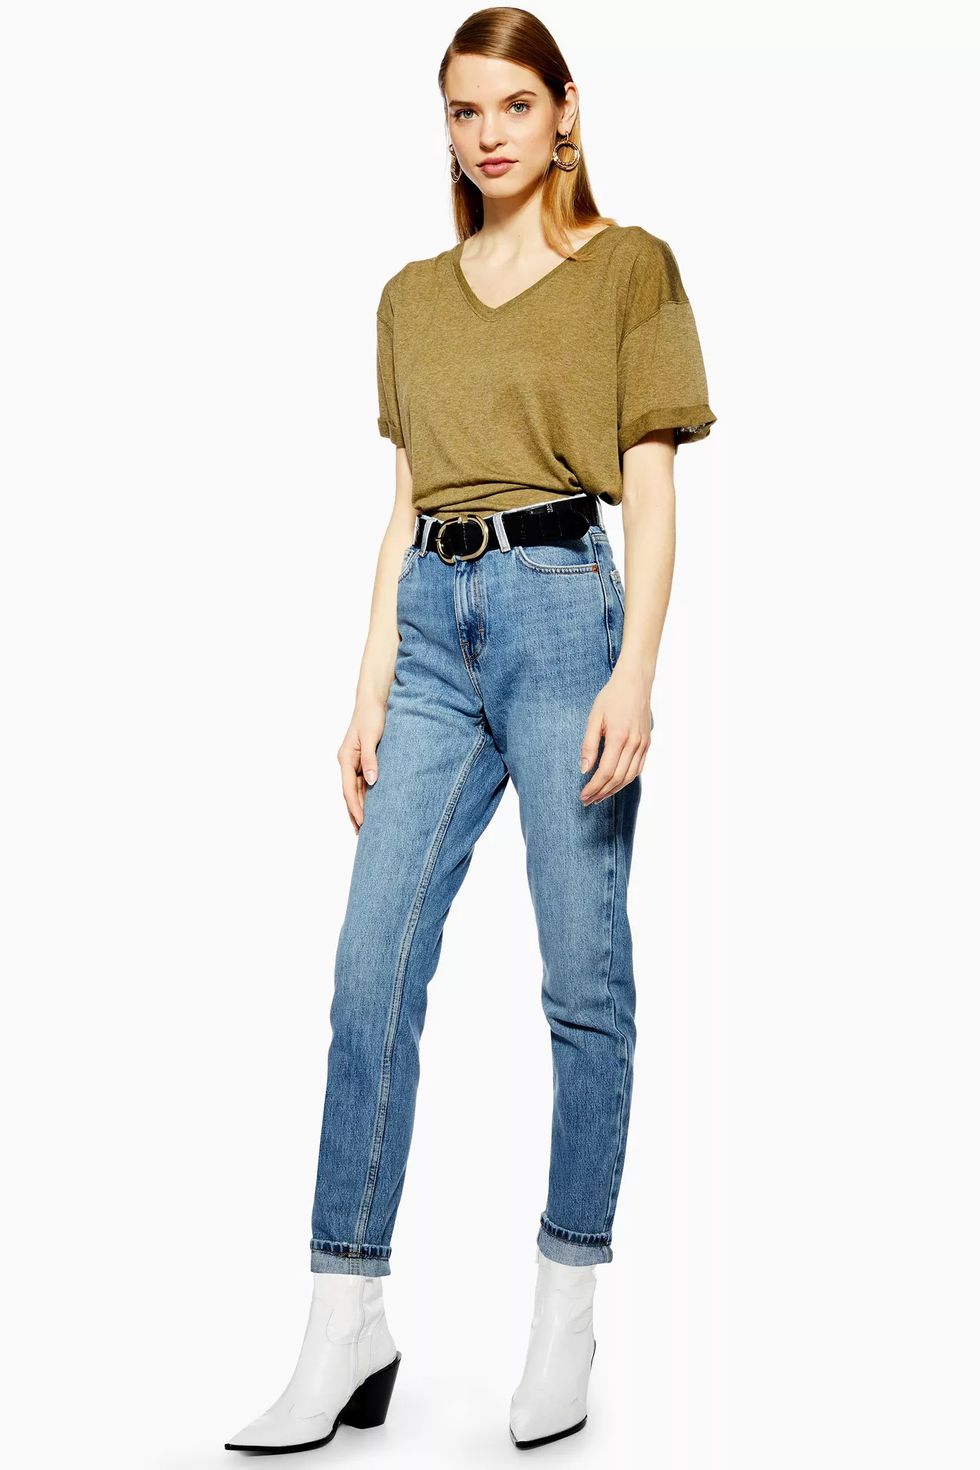 Kendall jenner jeans topshop